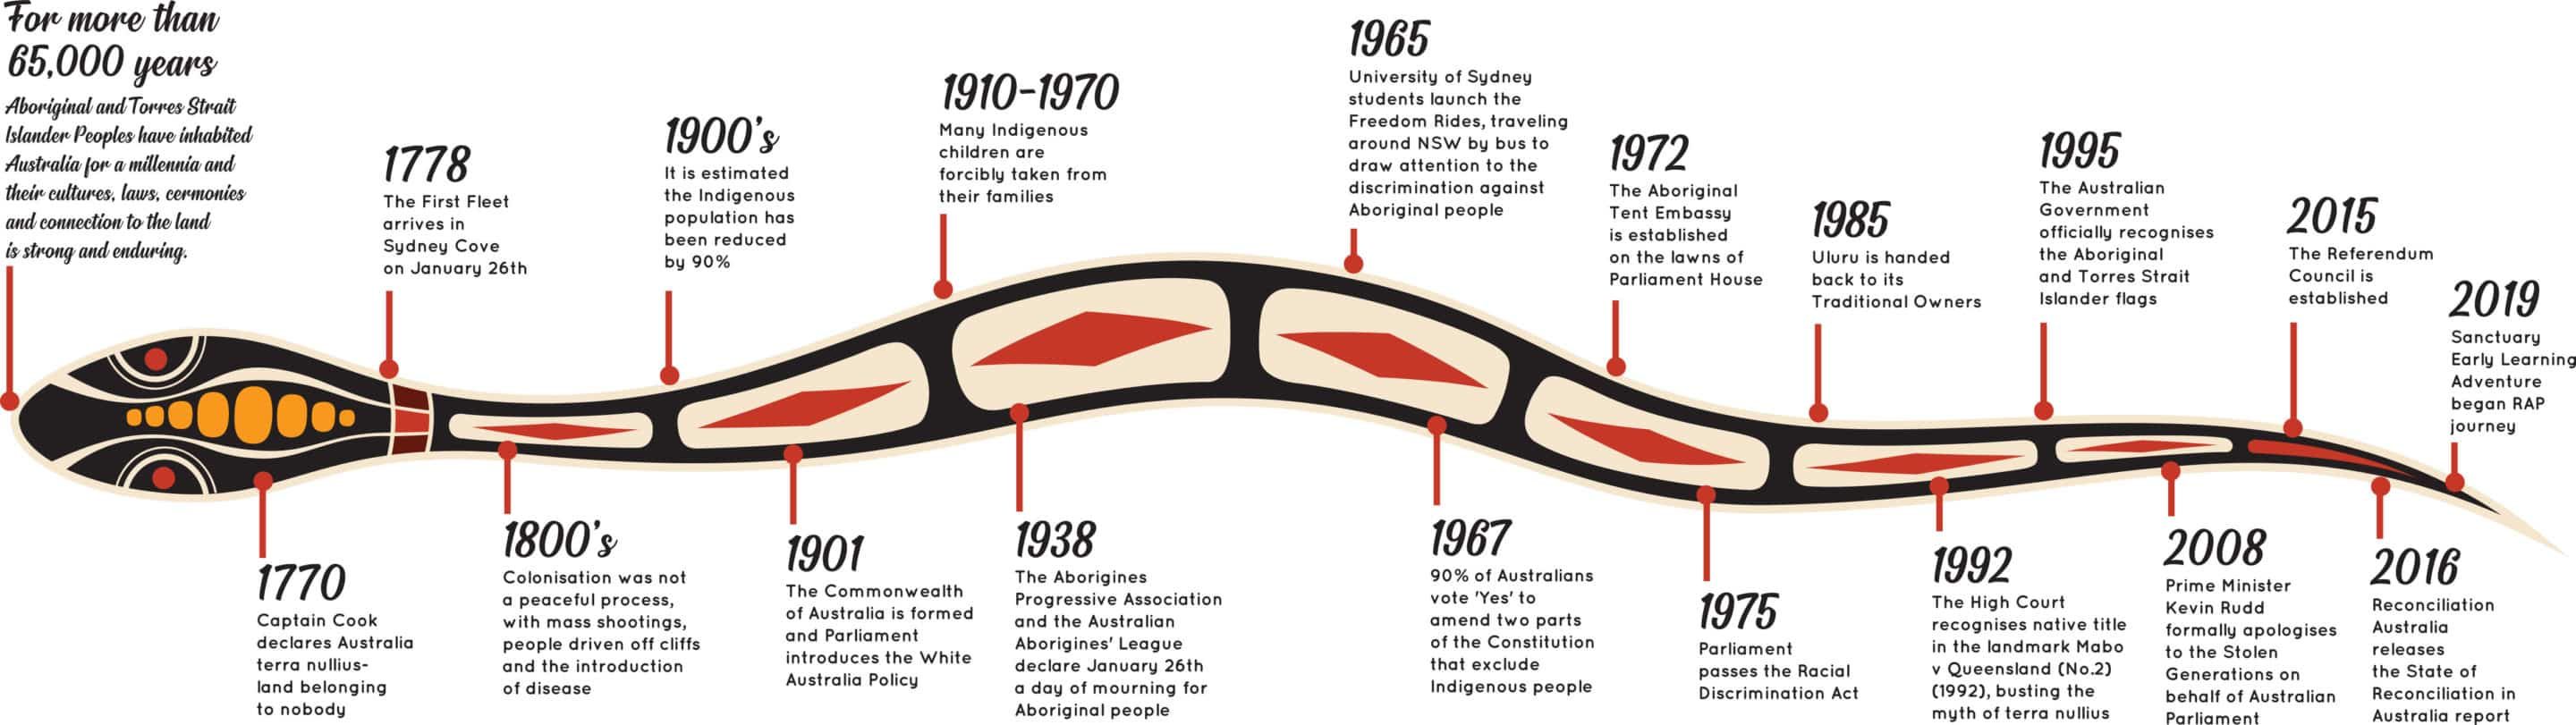 Sanctuary RAP Snake Timeline — Early Learning Centre